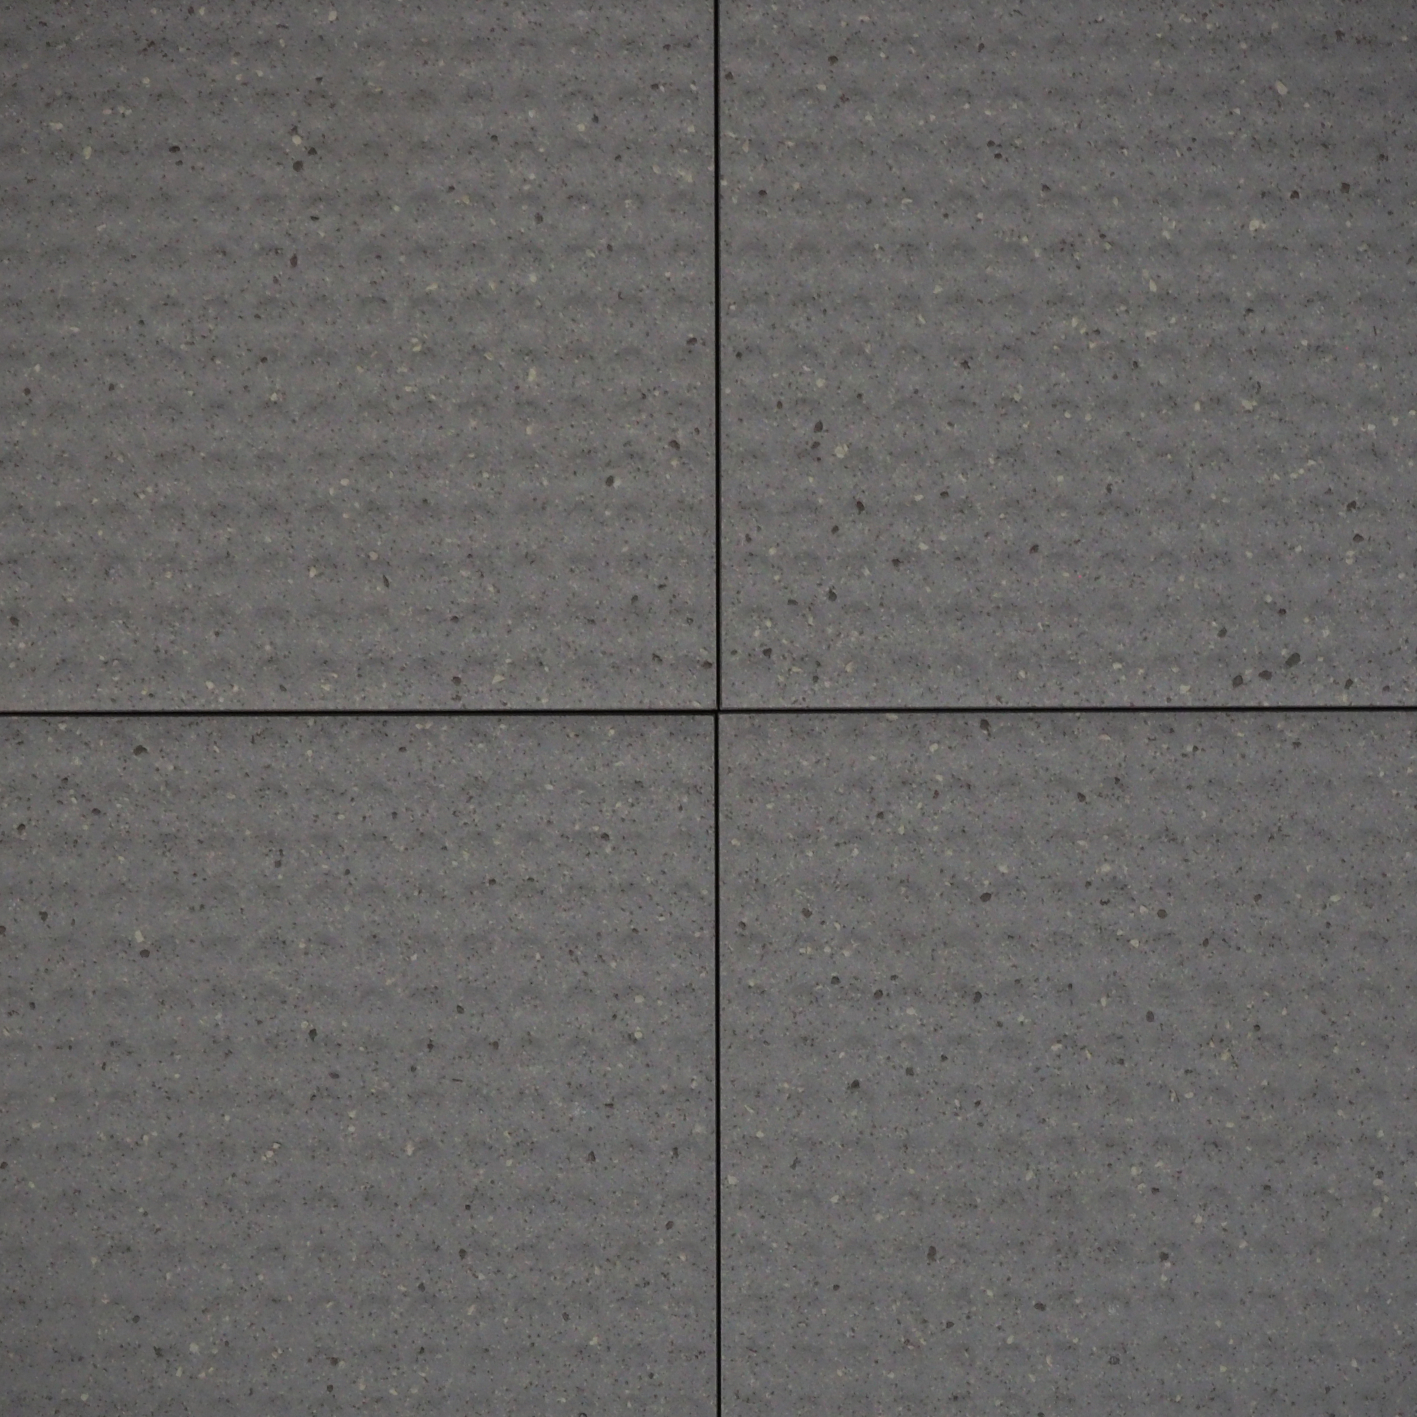 Anti slip ceramic floor tiles by Royal Mosa Holland (145 x 145 mm)